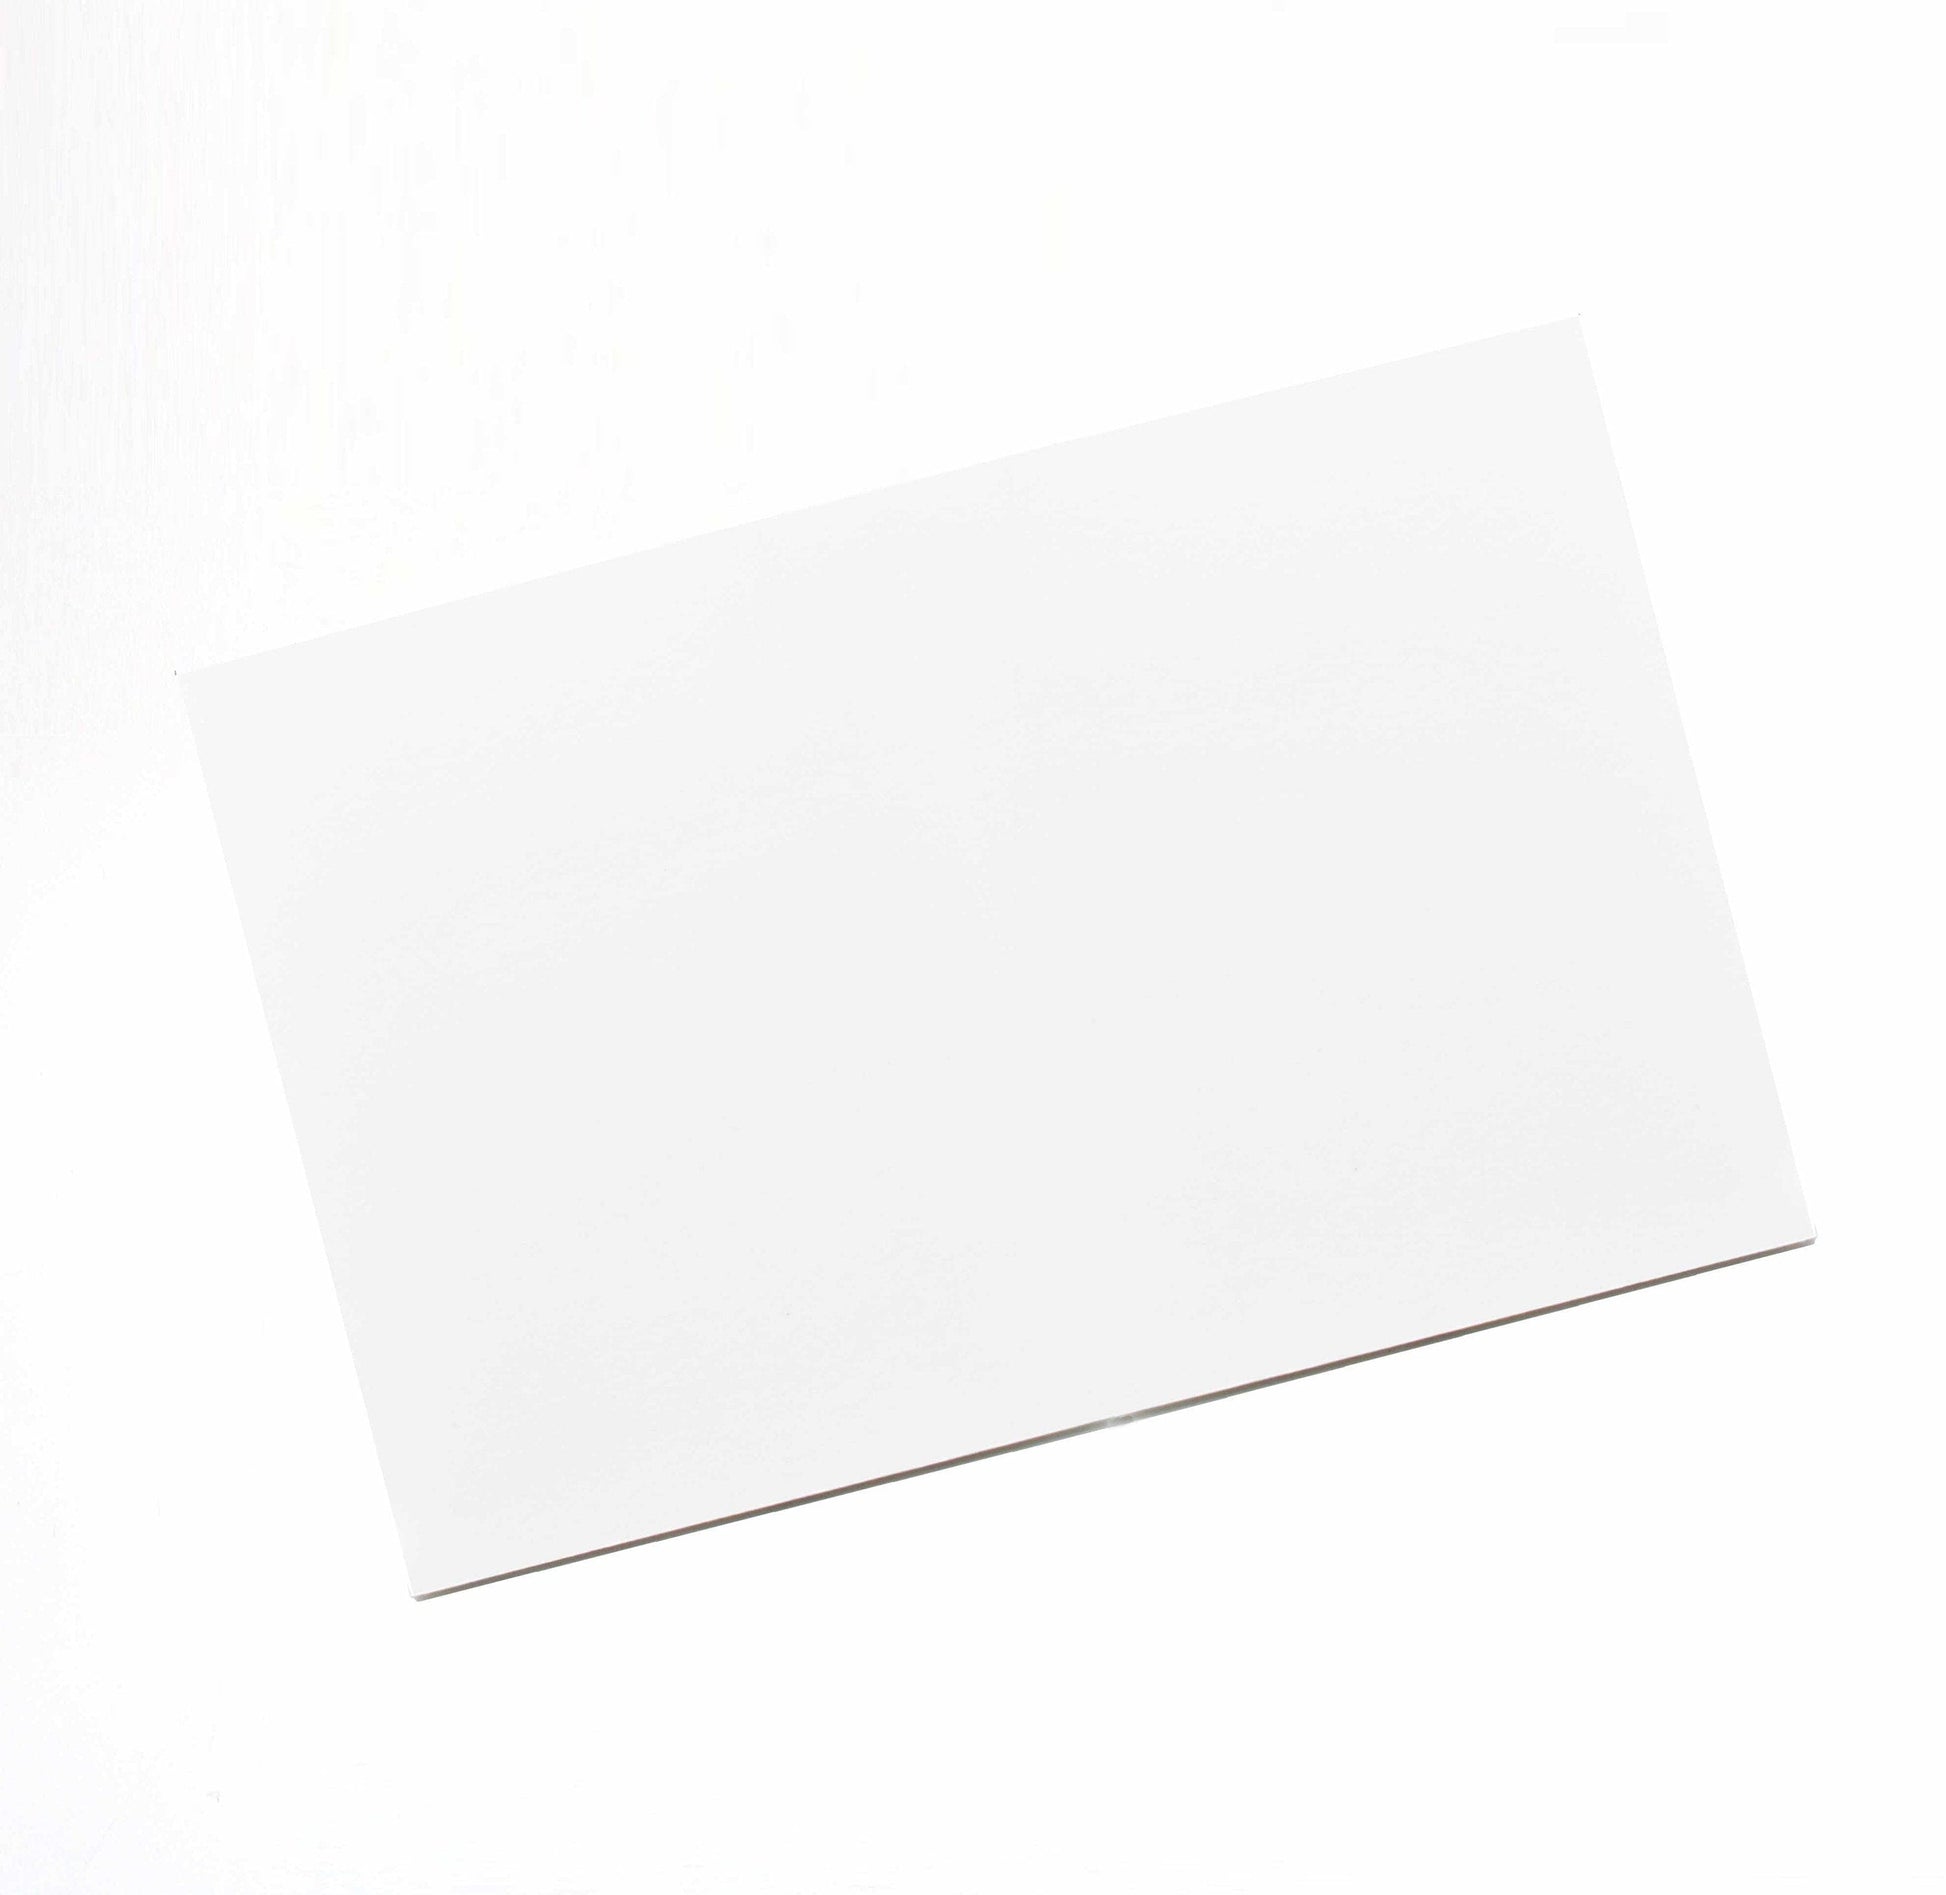 PinkPolish Design Note Cards "As You Wish" Handmade Notecard